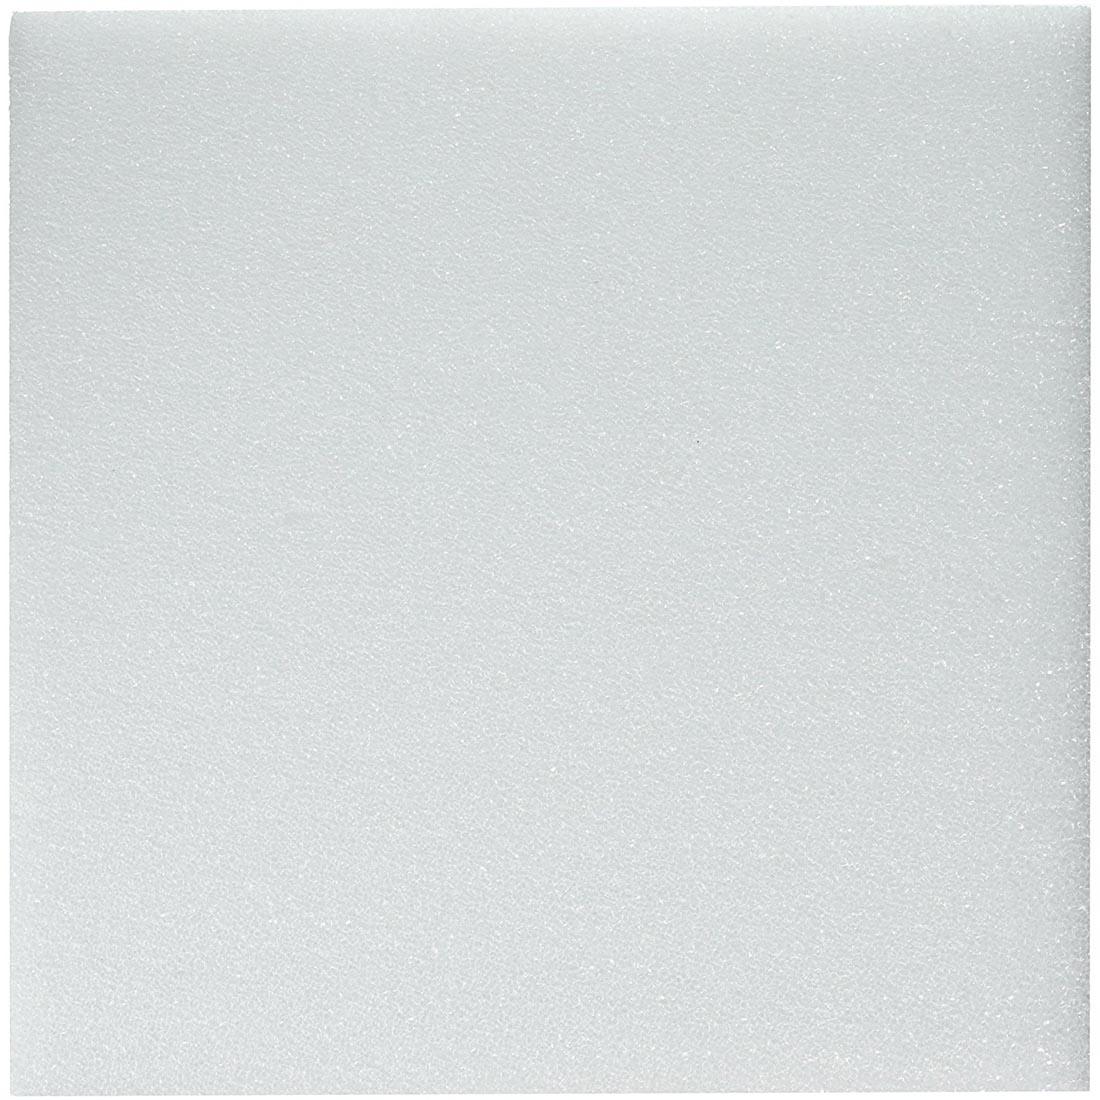 Square White Styrofoam Sheet